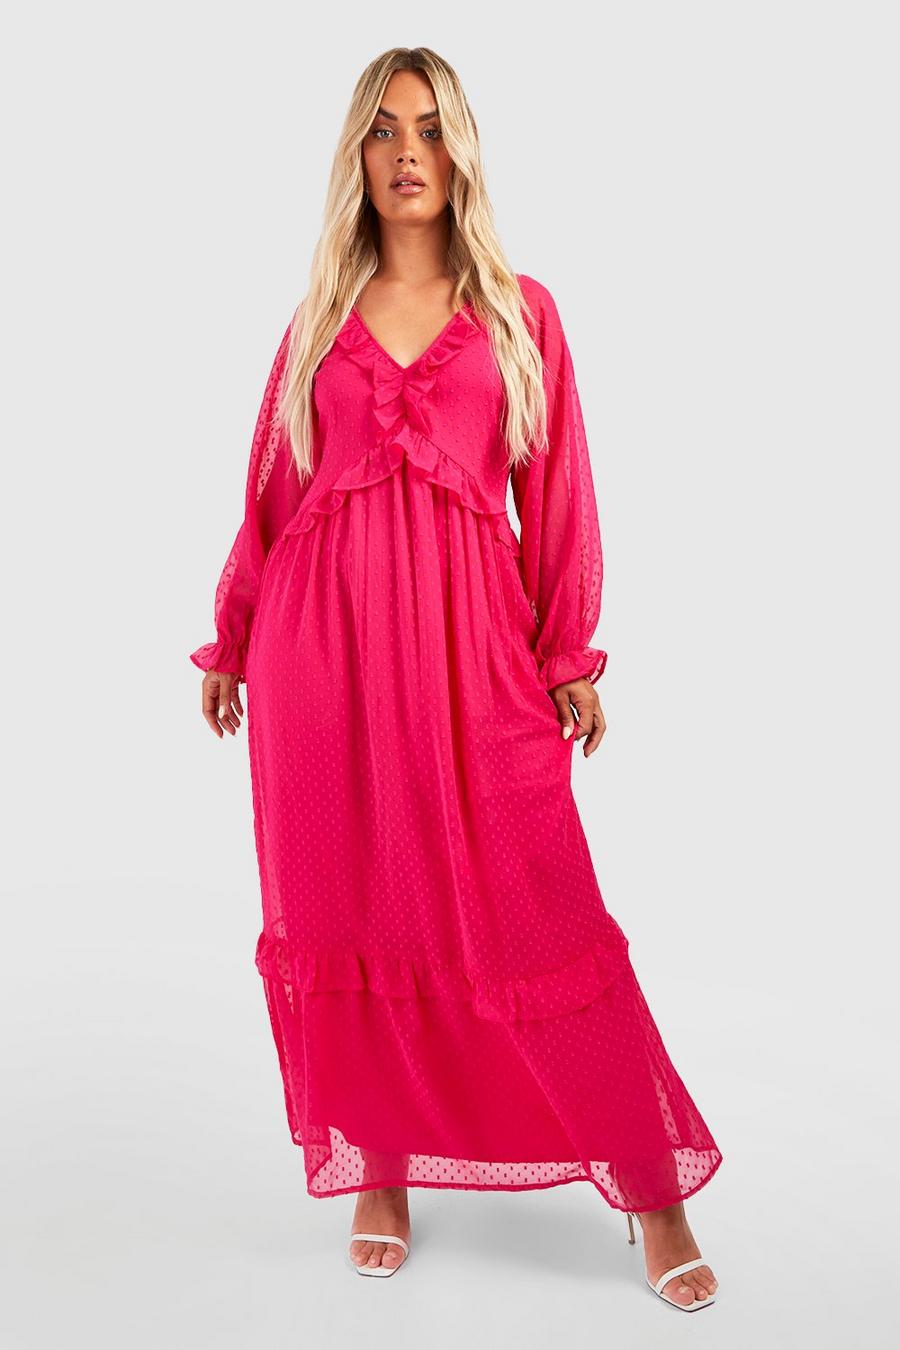 Grande taille - Robe longue à volants, Hot pink